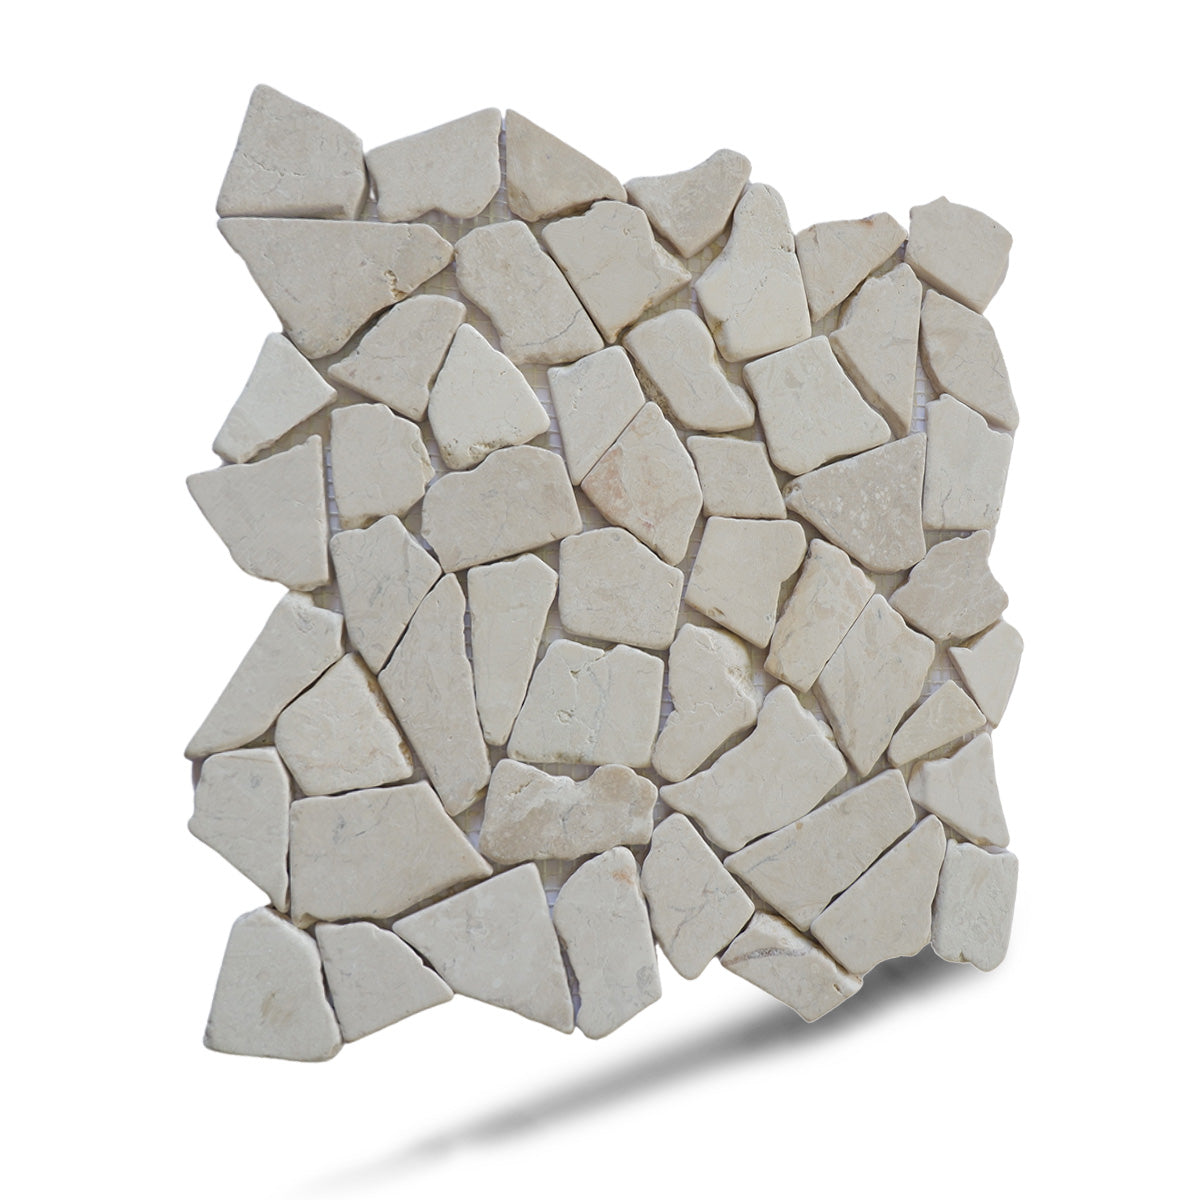 White Mosaic Tile for Wall and Floor, Random Mosaic Bathroom Tiles